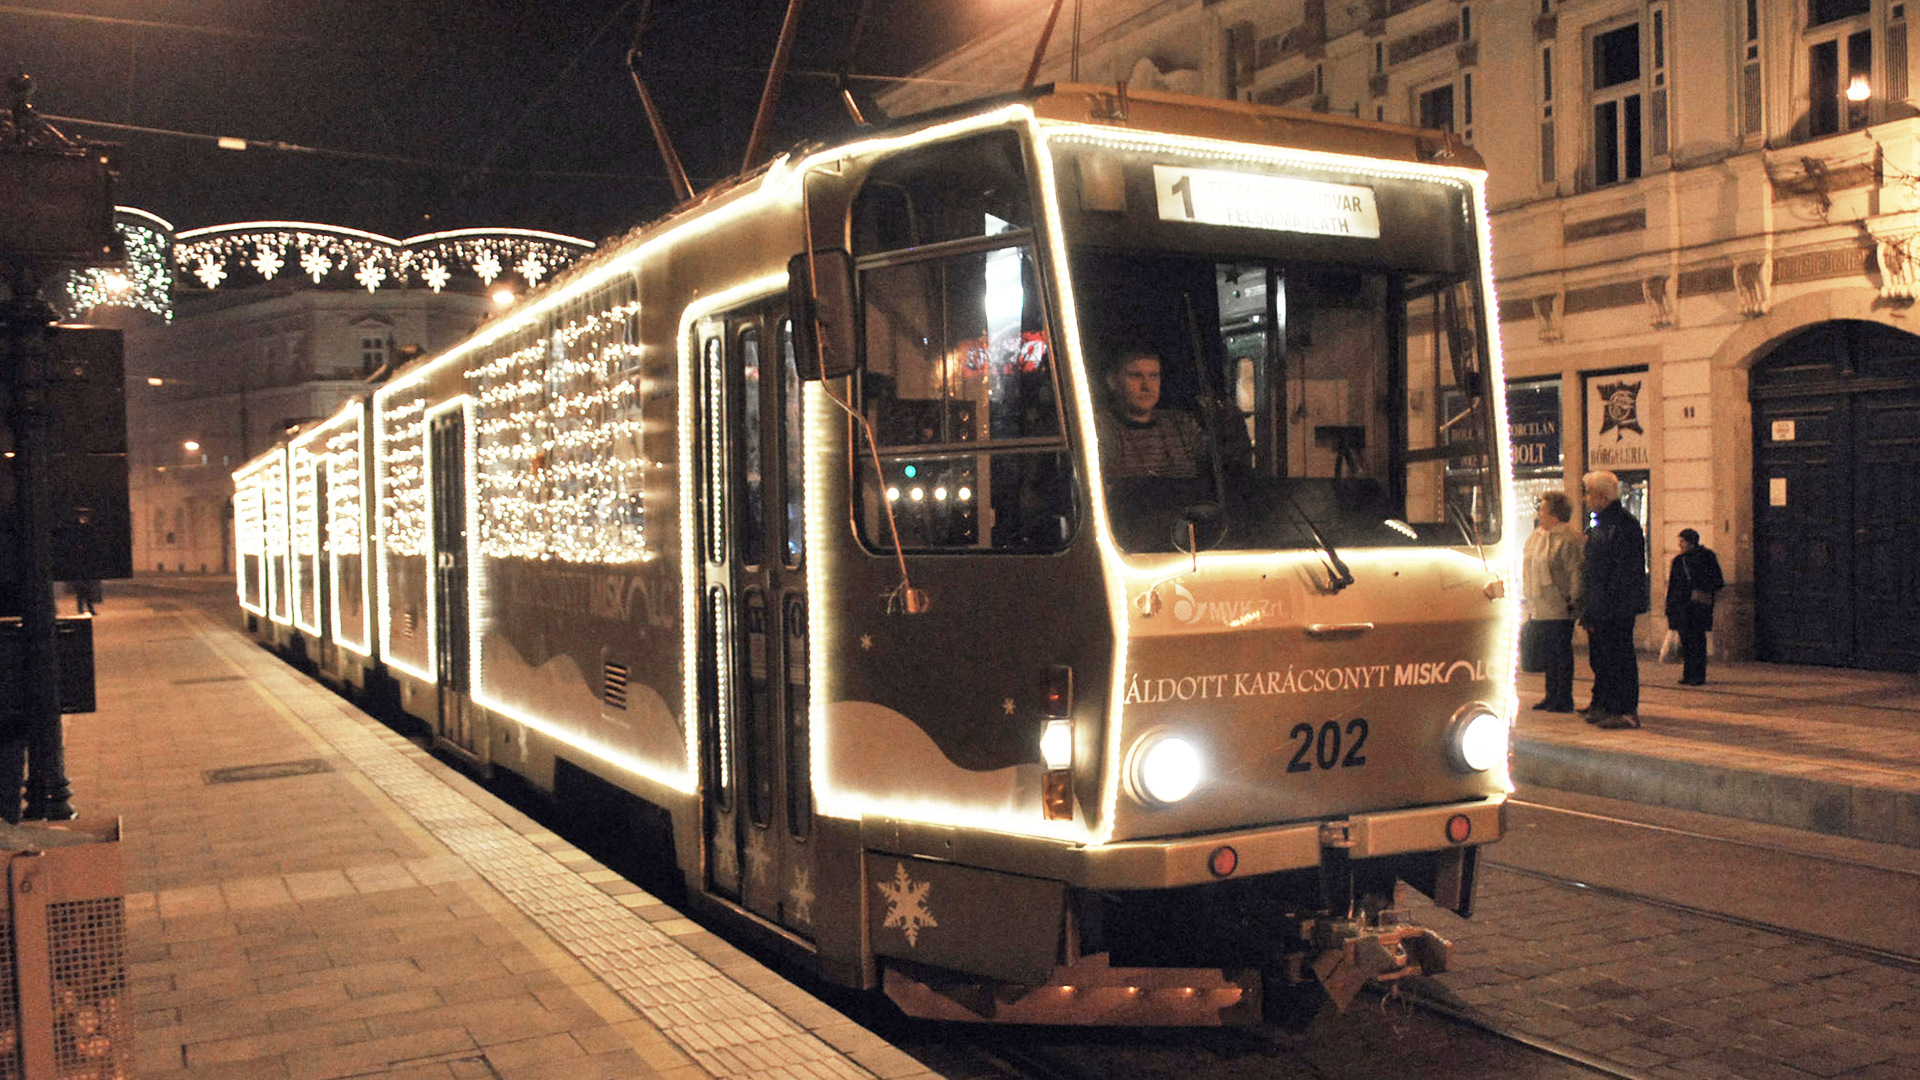 Miskolc’s Advent Tram 2013